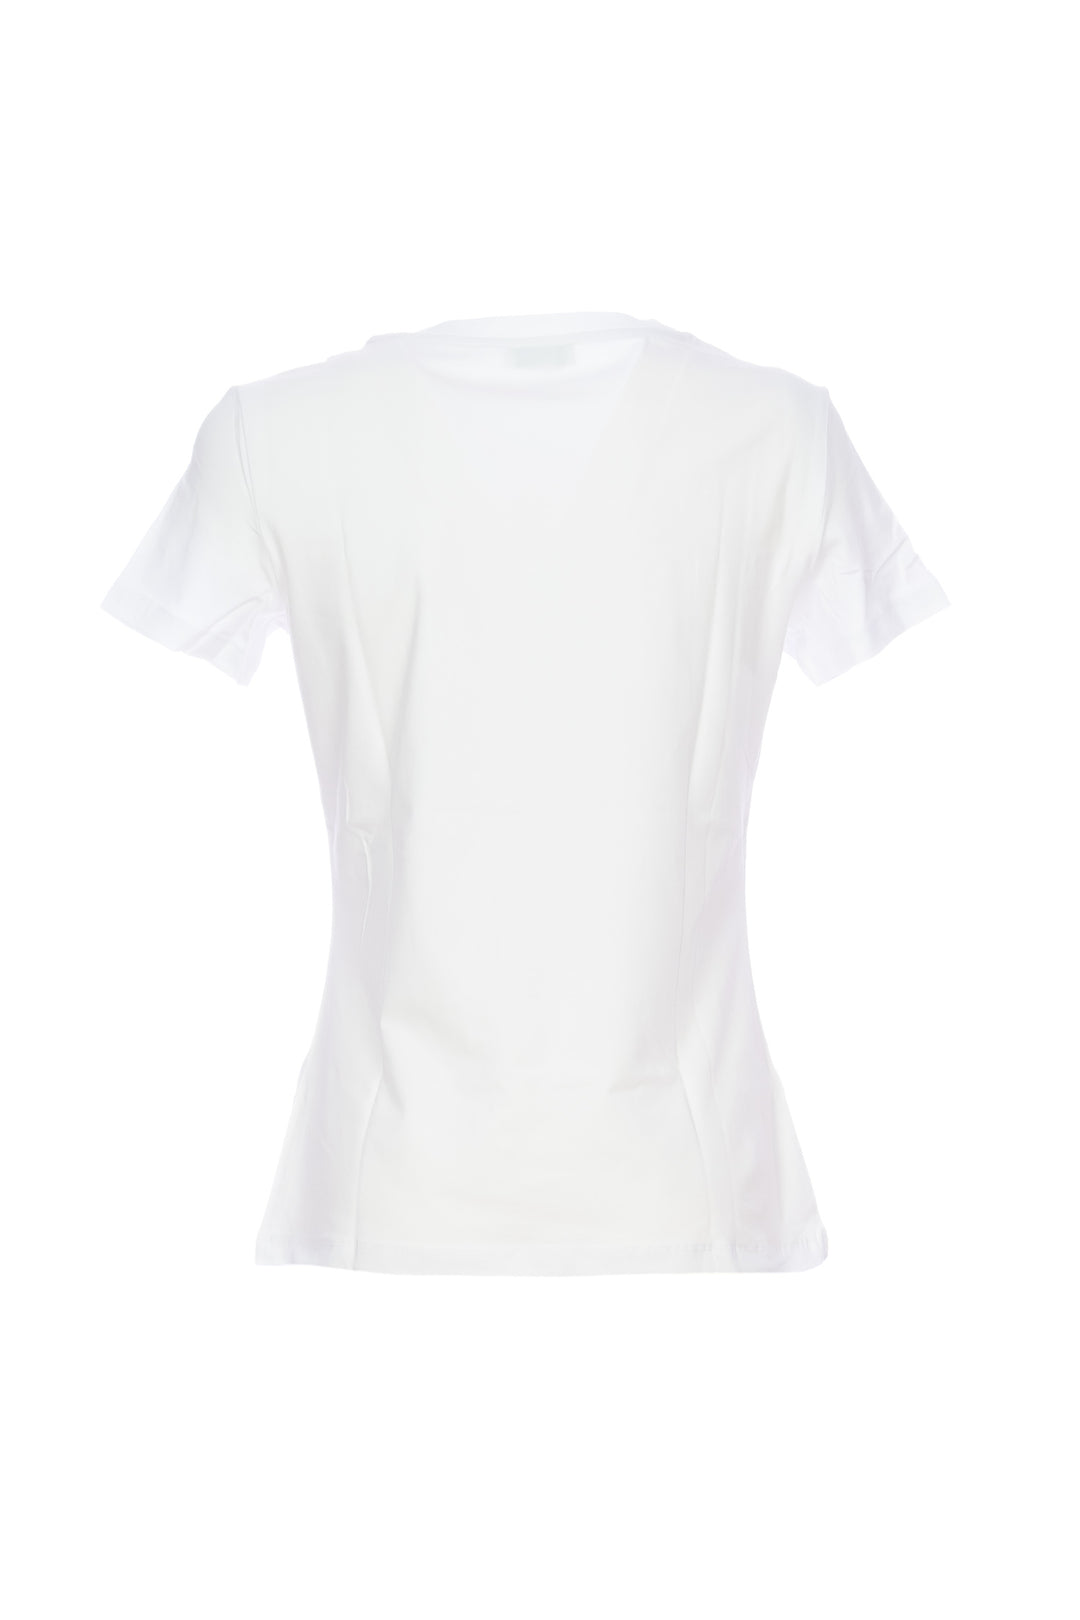 FRACOMINA T-shirt regular bianca in jersey con strass - Mancinelli 1954